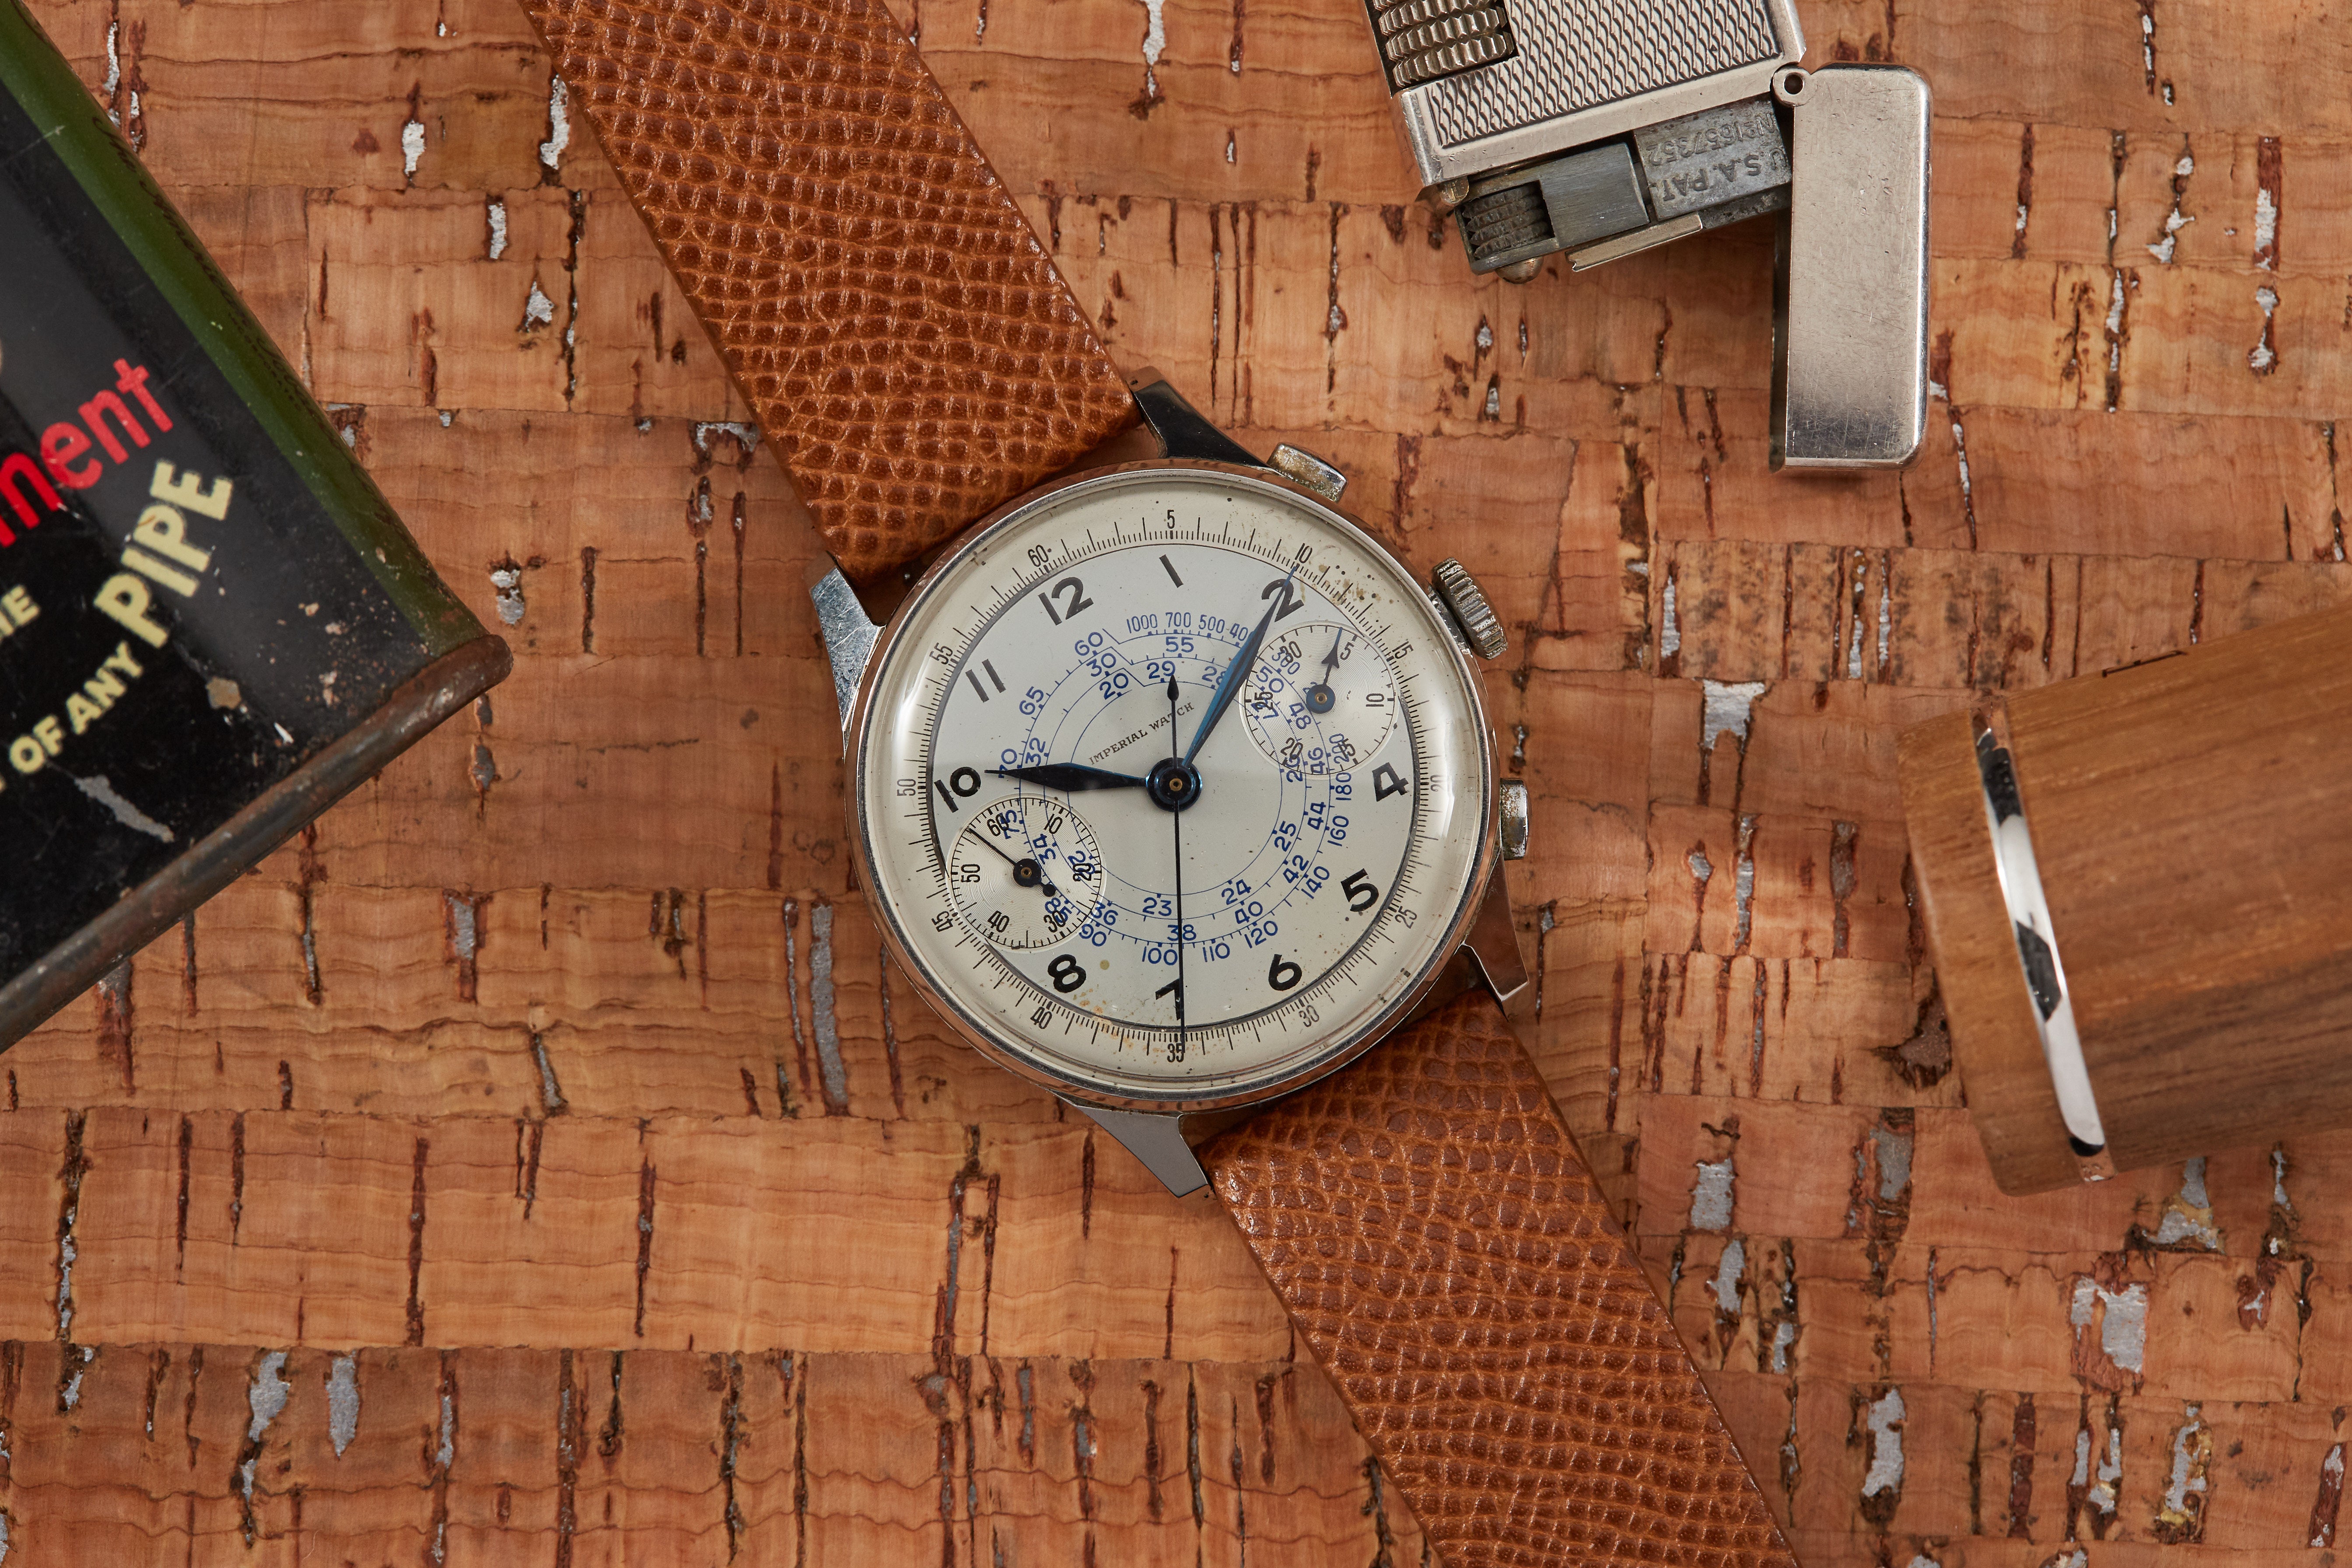 New Imperial Watch Co. - Watch Shop in Roorkee